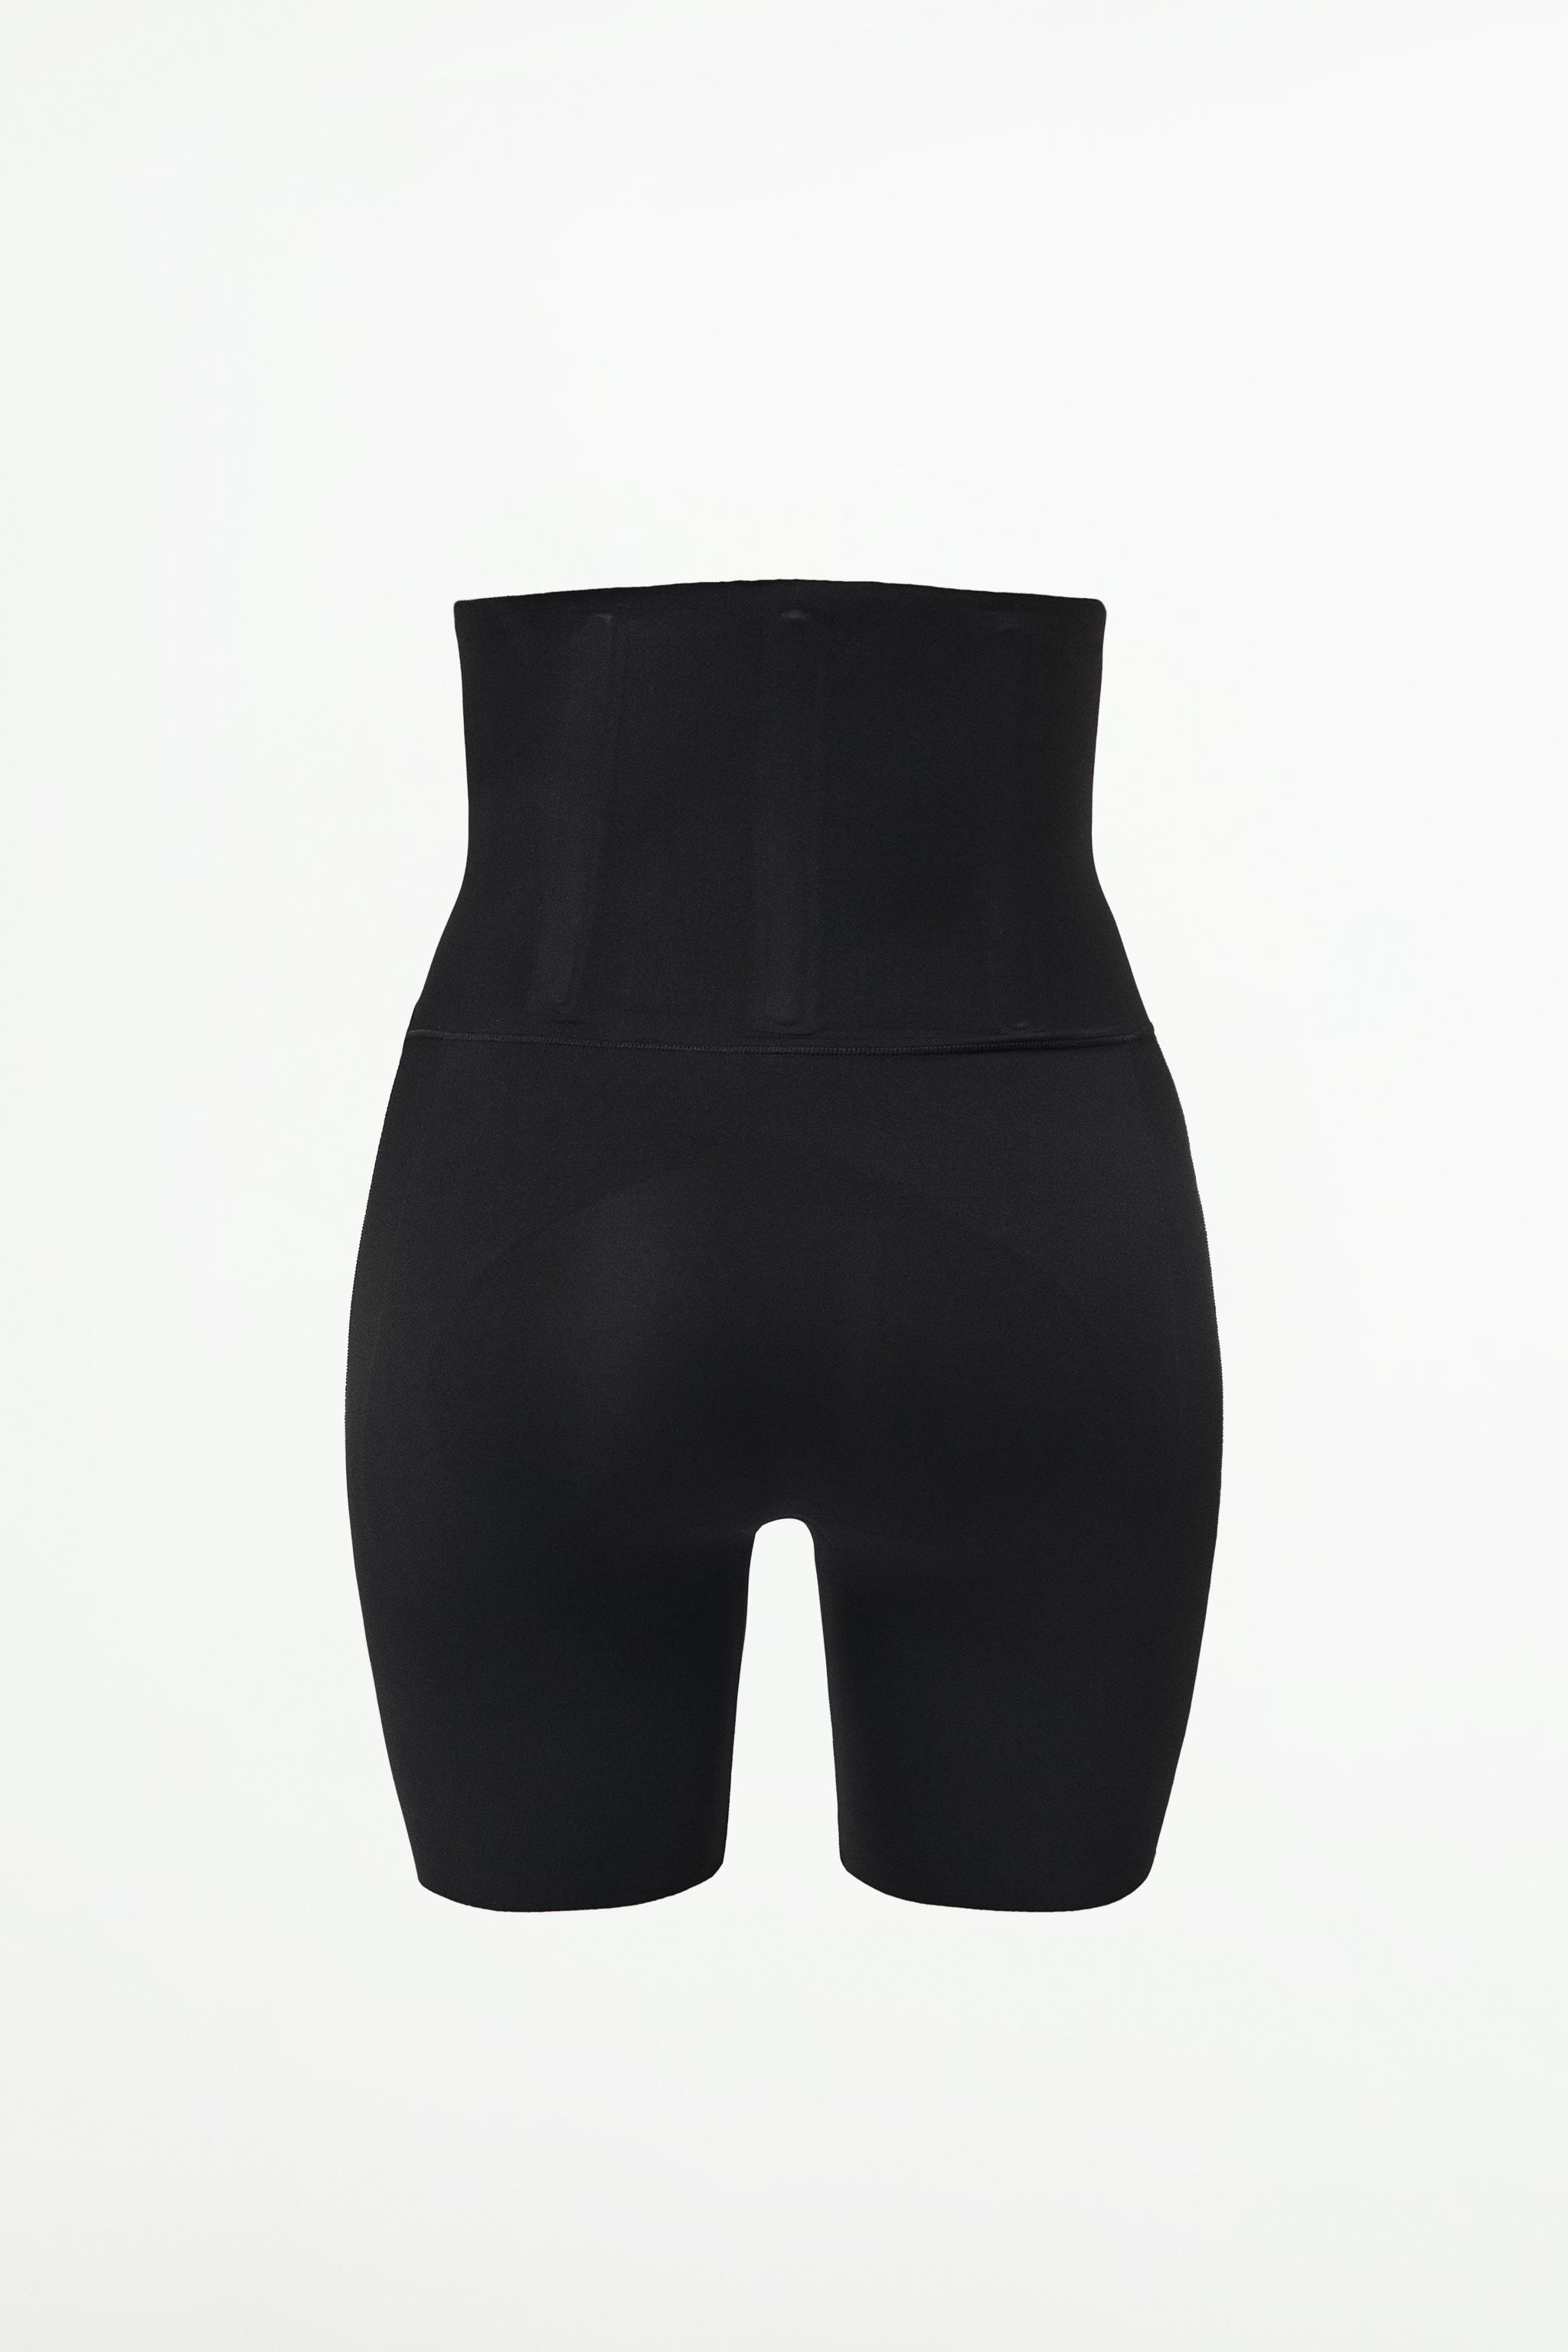 Buy Wunderlove Black High-Waist Shaping Shorts from Westside